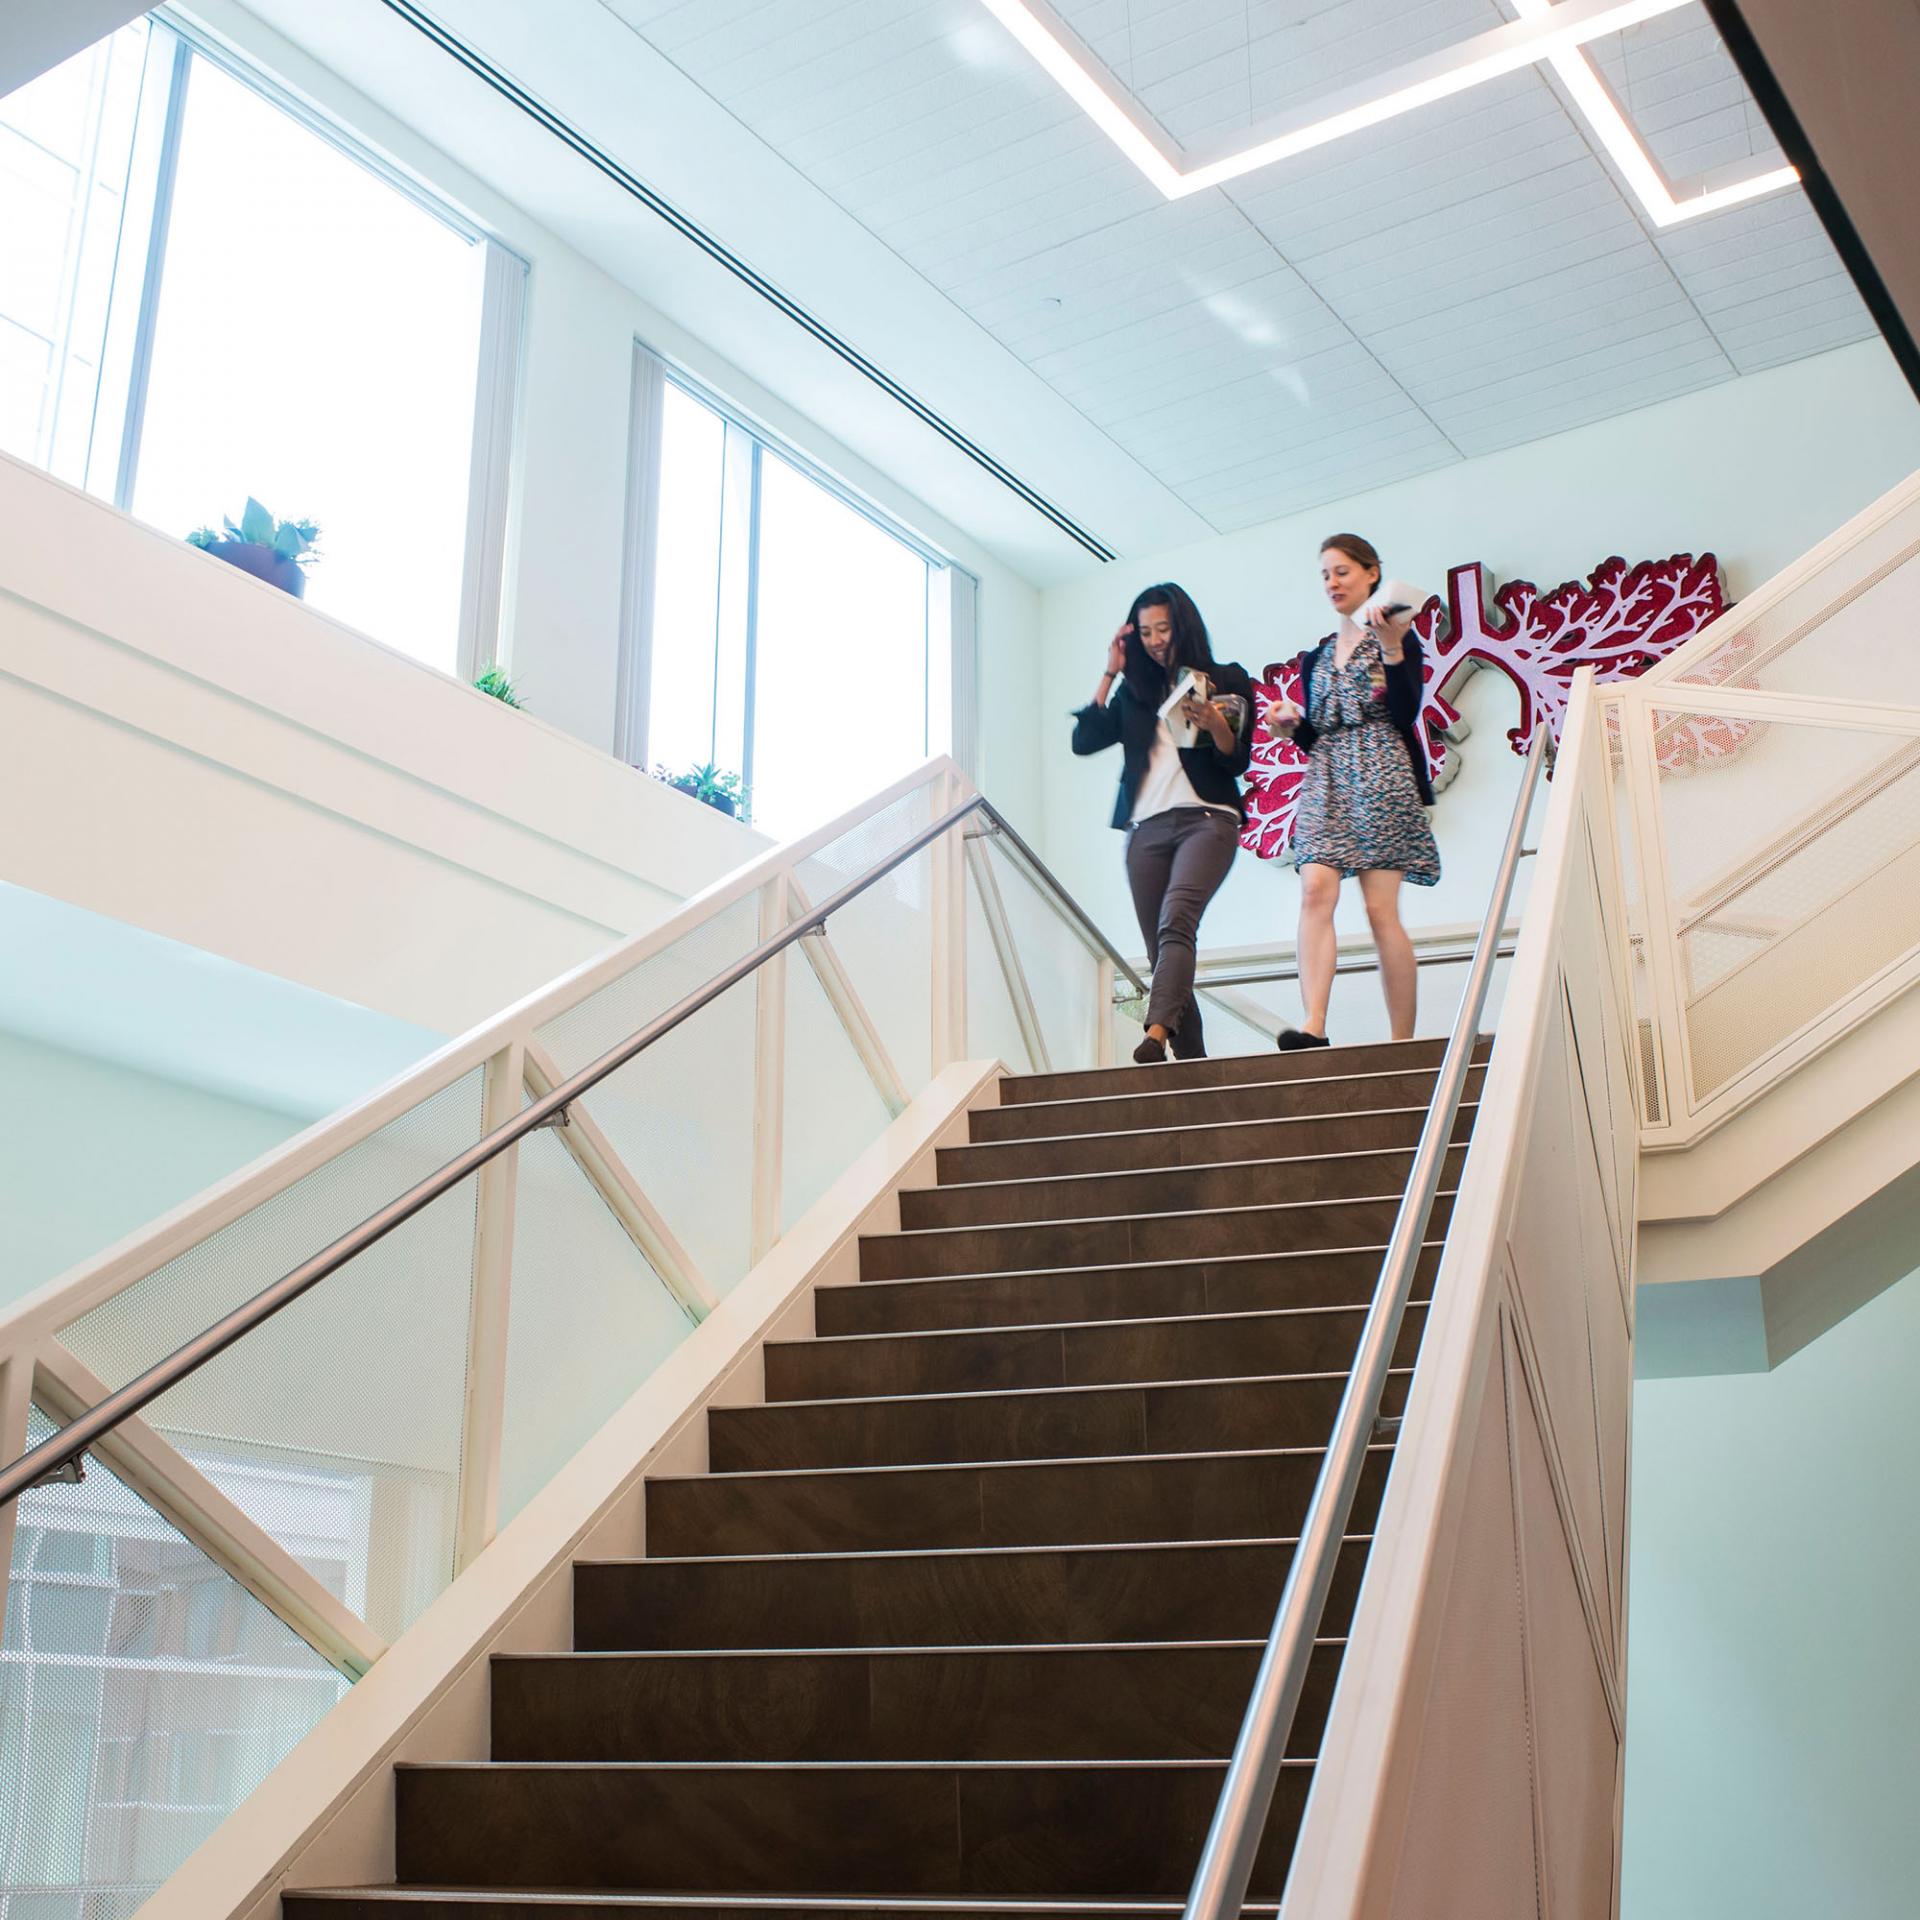 Employees walking down a staircase at Vertex Pharmaceuticals Boston headquarters